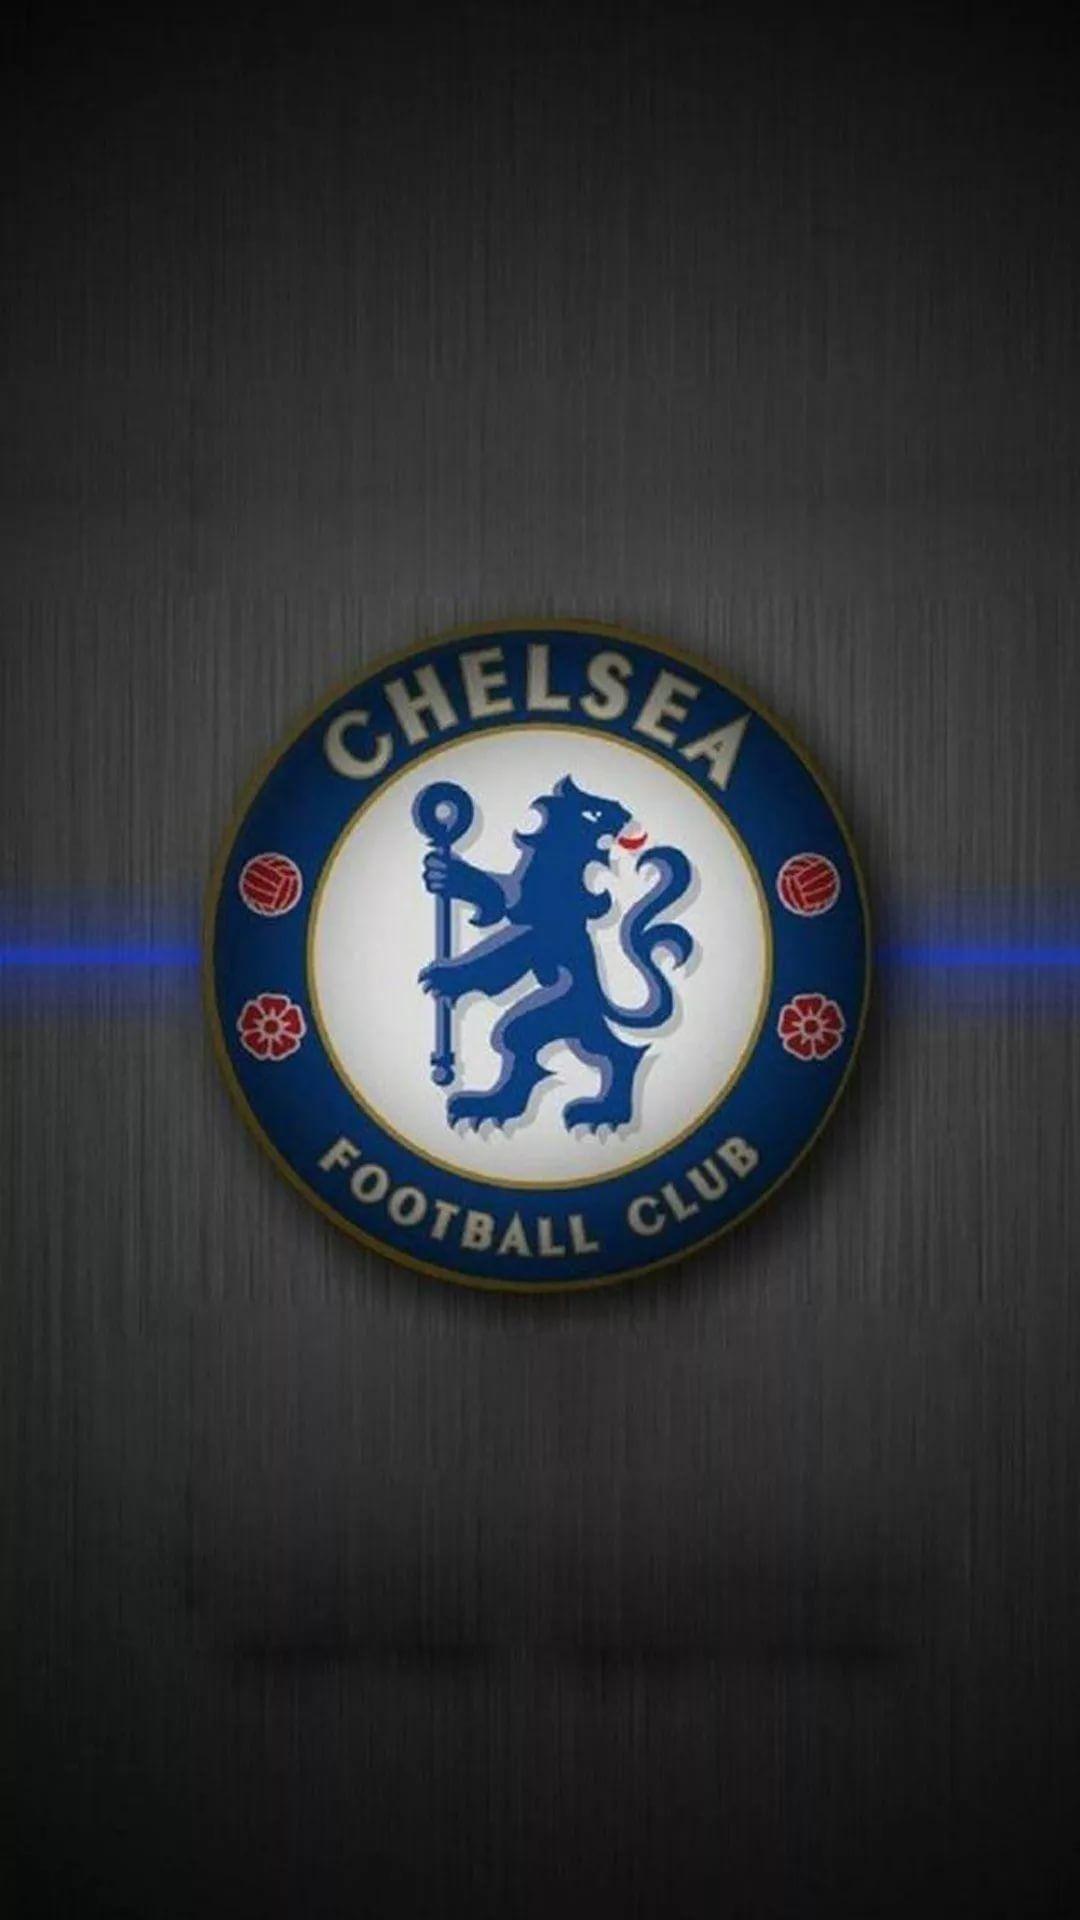 Chelsea FC iPhone Wallpaper: Image